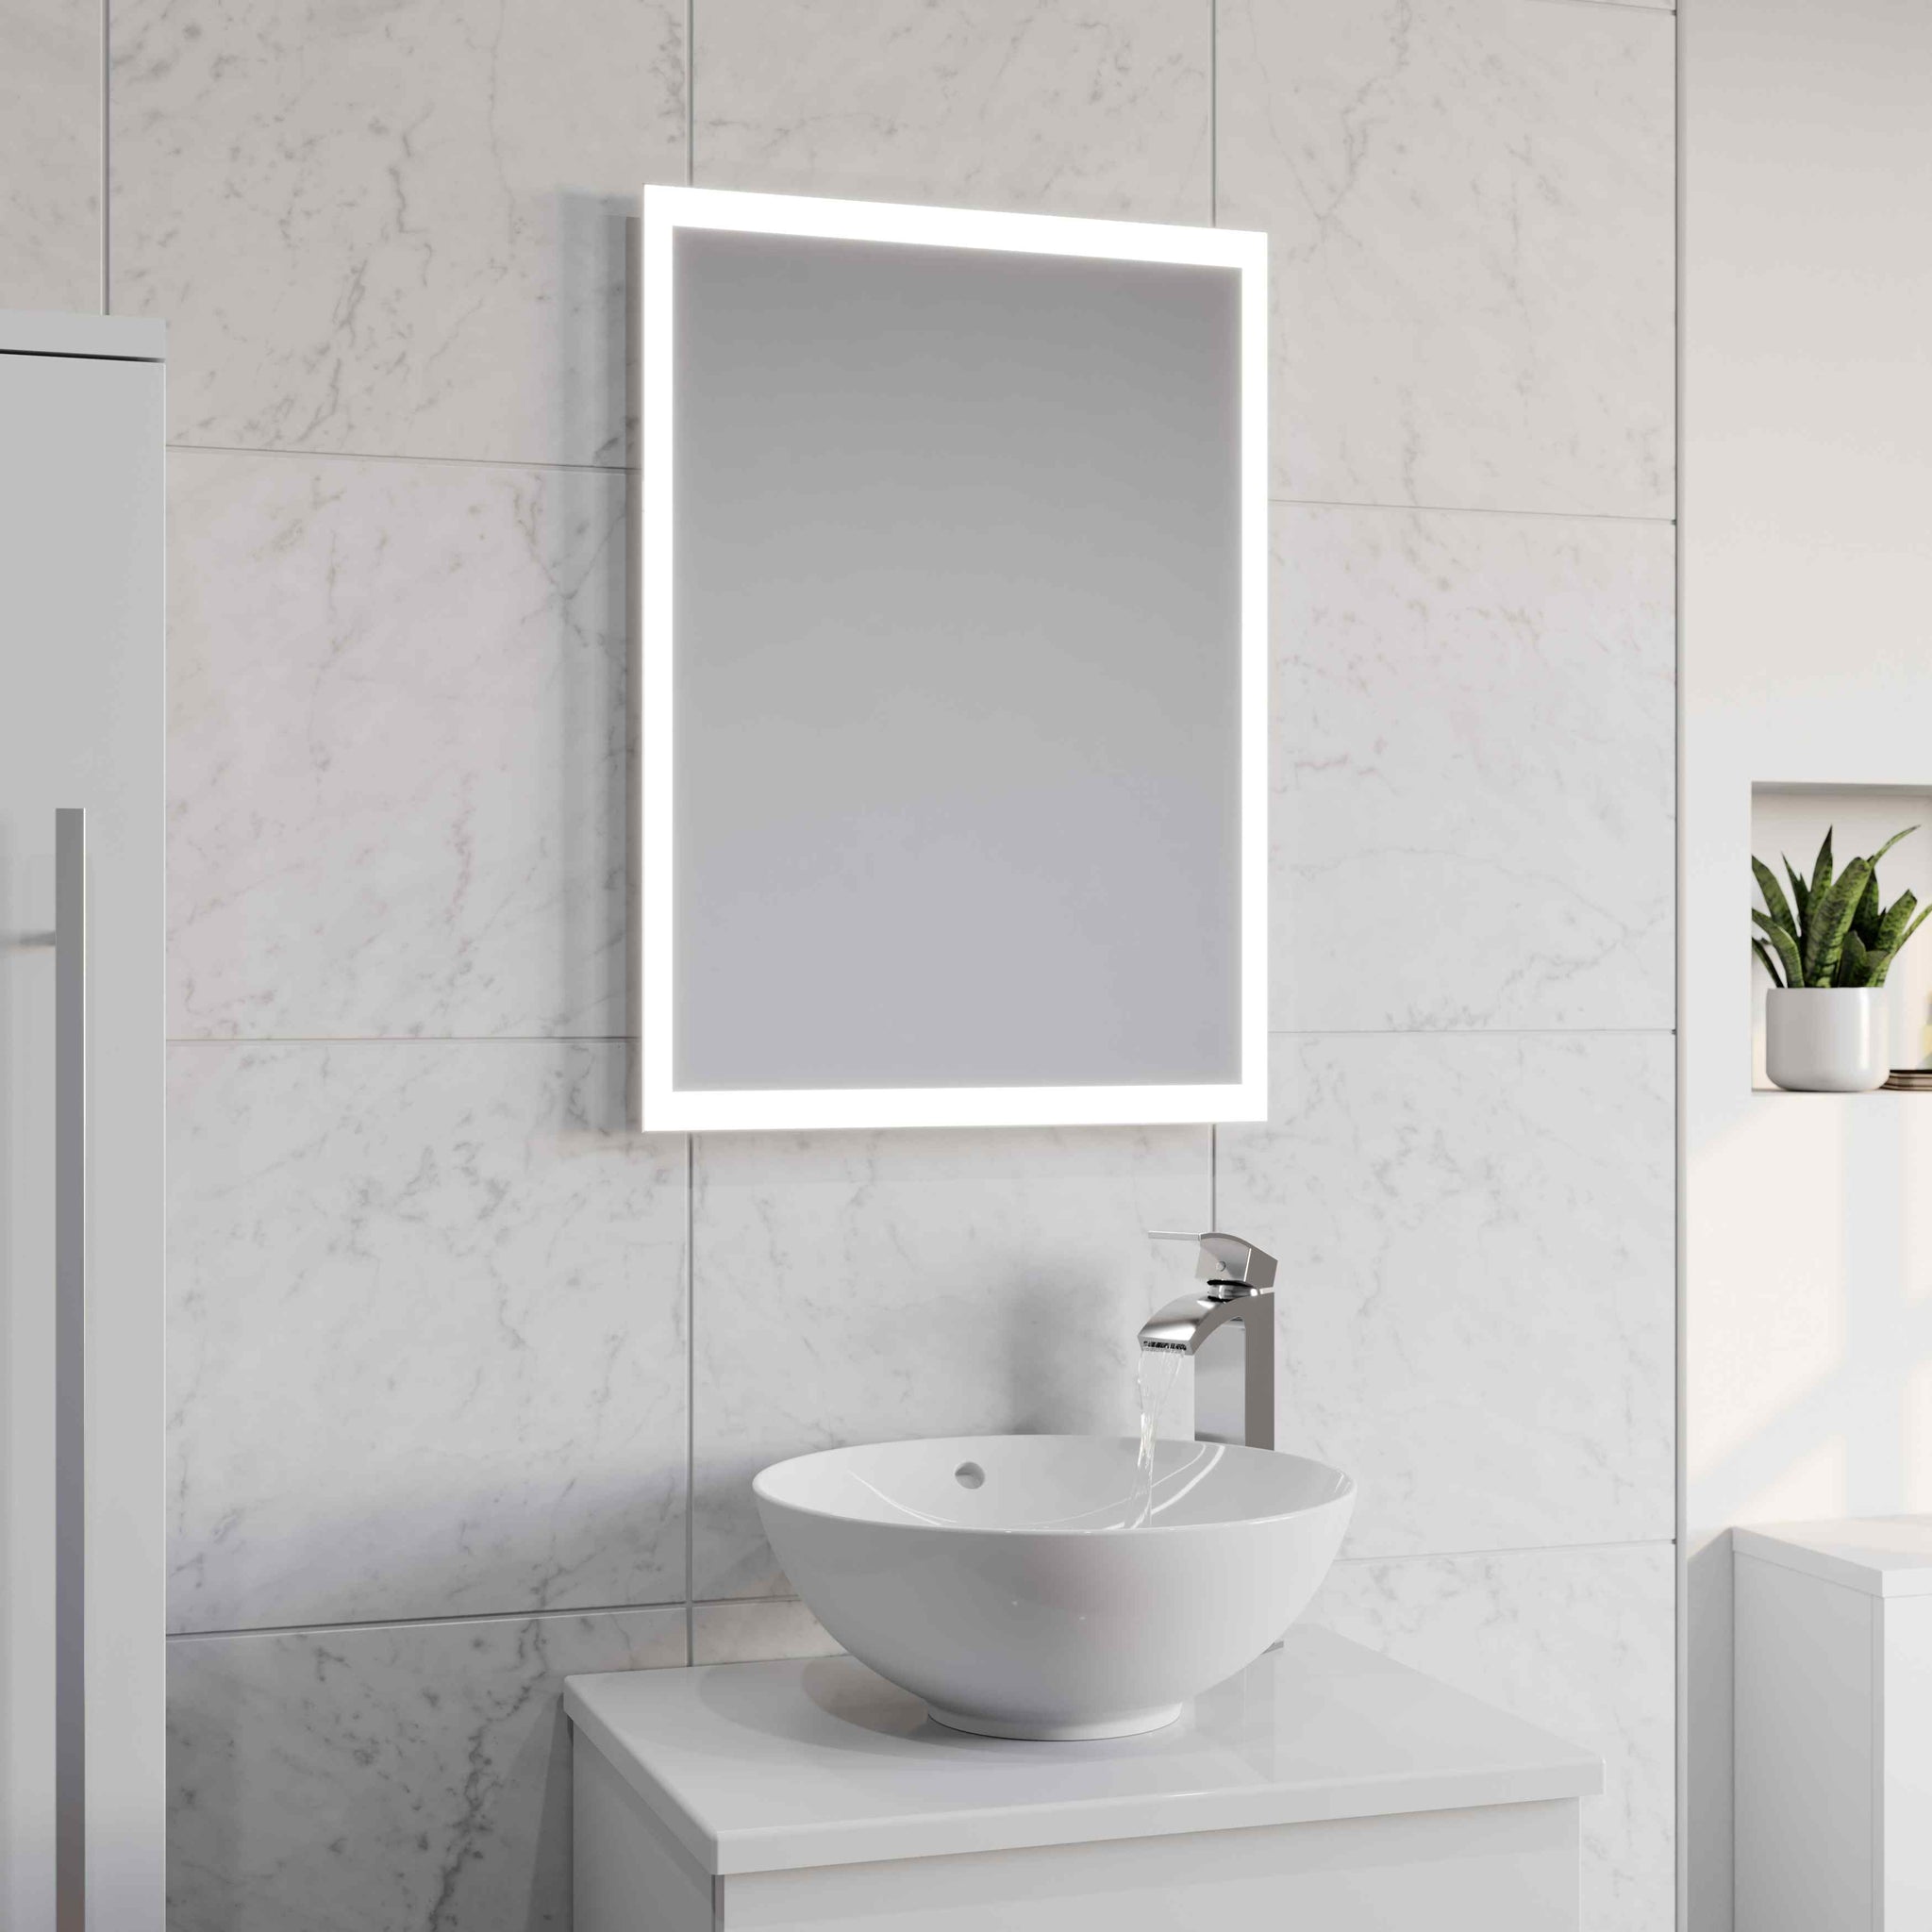 Contemporary bathroom lighting design illuminating a sleek, modern space.